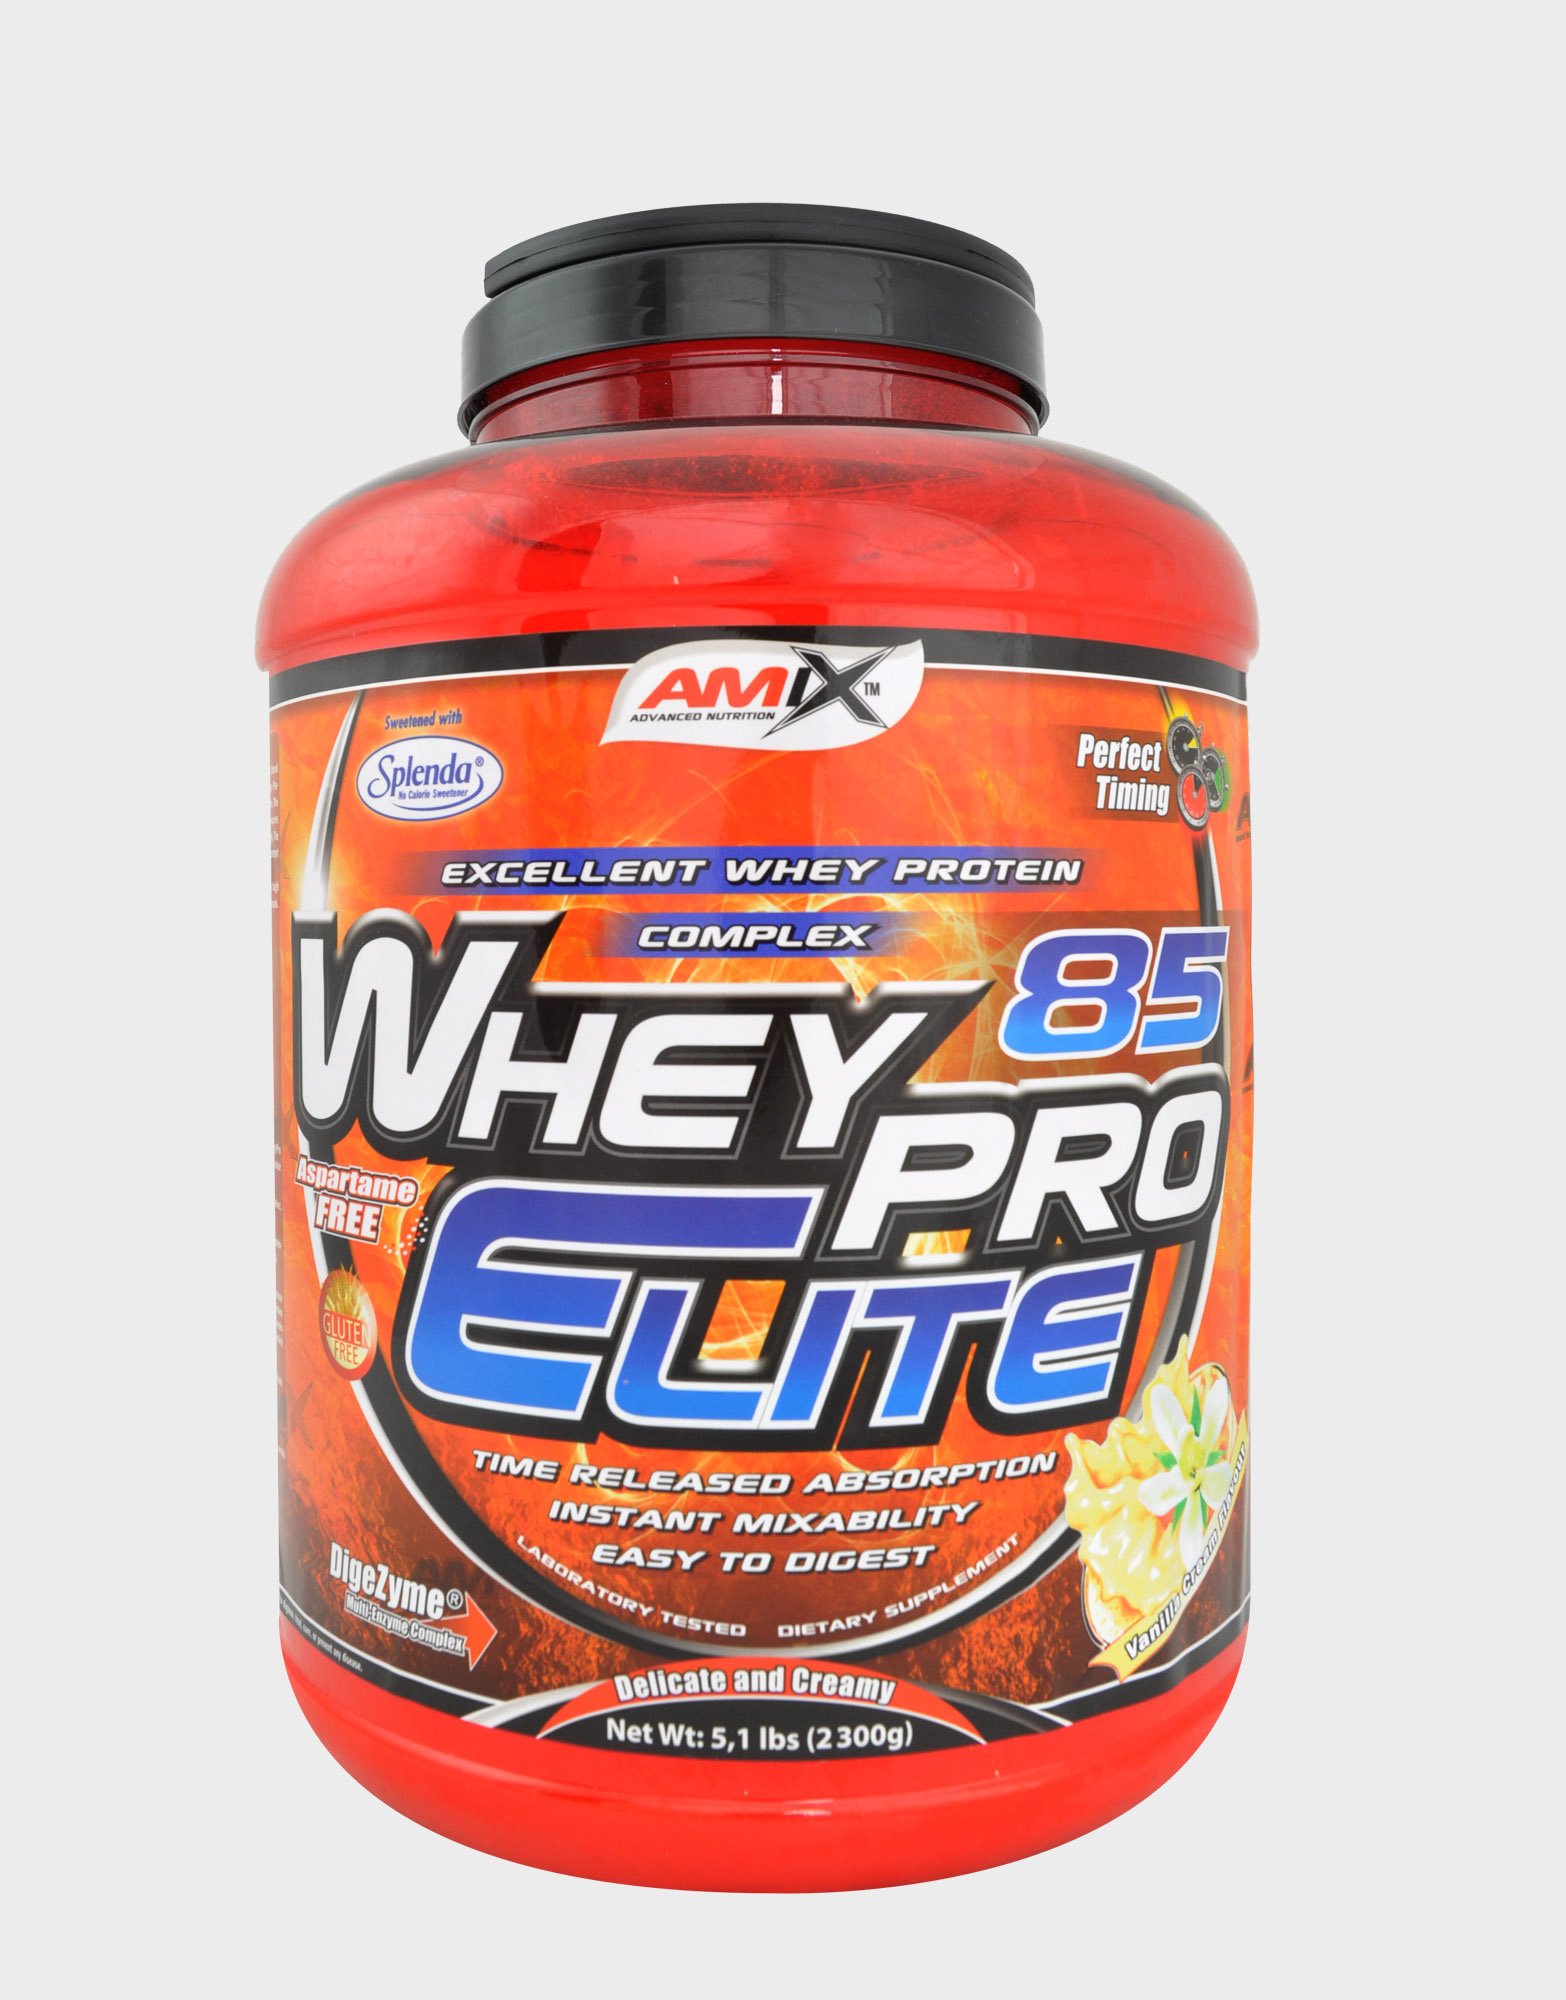 Whey Pro Elite 85%, 2300 g, AMIX. Protein Blend. 